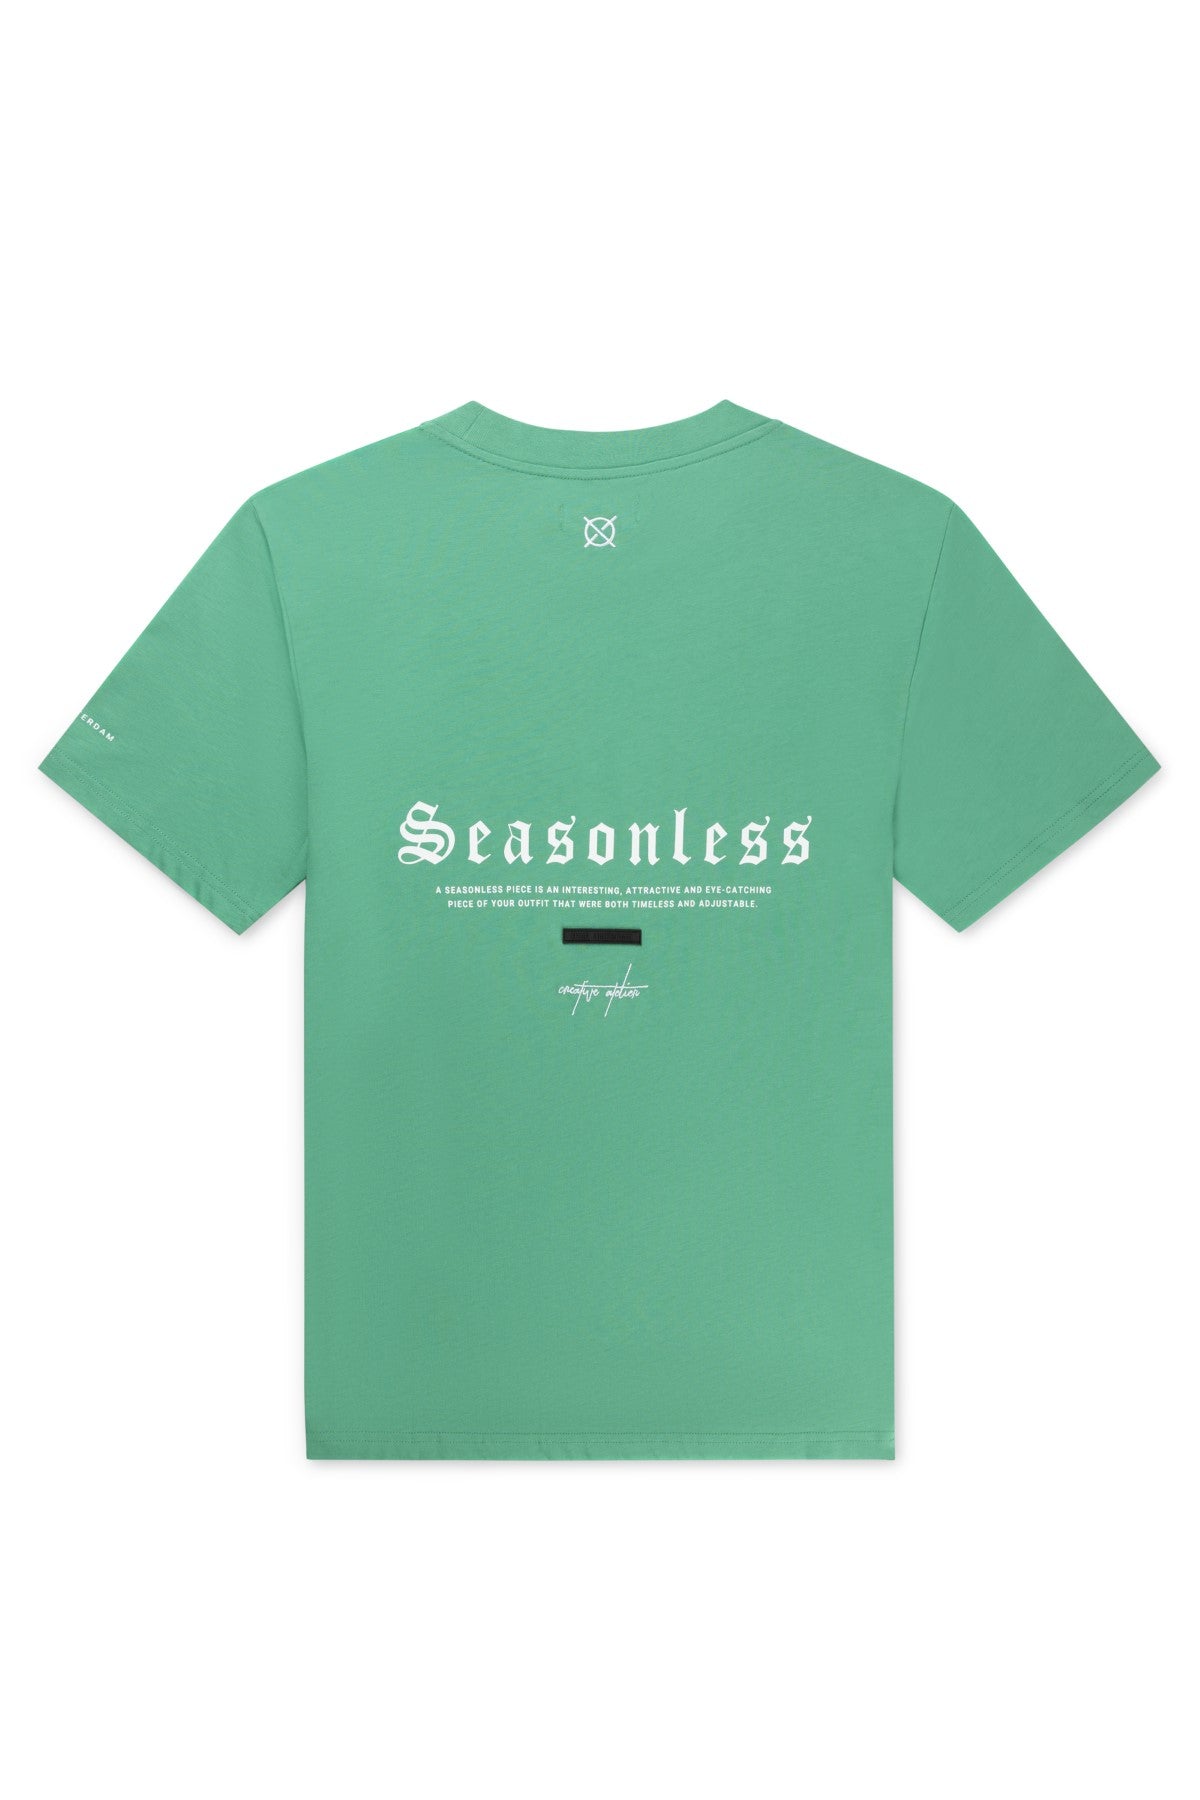 Seasonless T-Shirt - Green Spruce